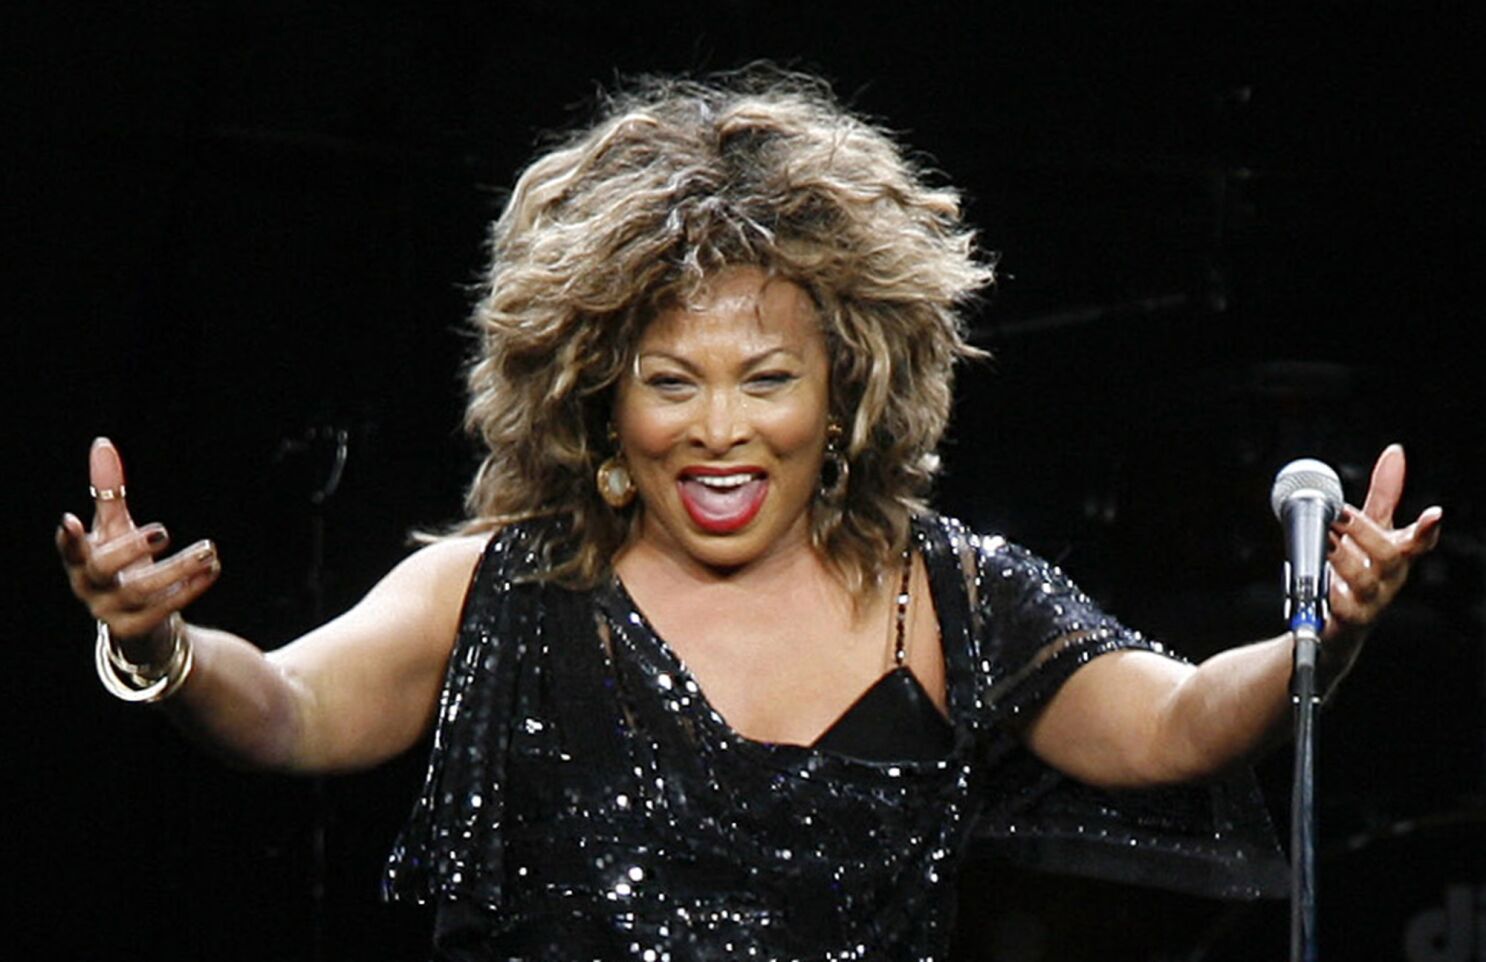 Rock mziinin efsanevi ismi Tina Turner 83 yanda hayatn kaybetti